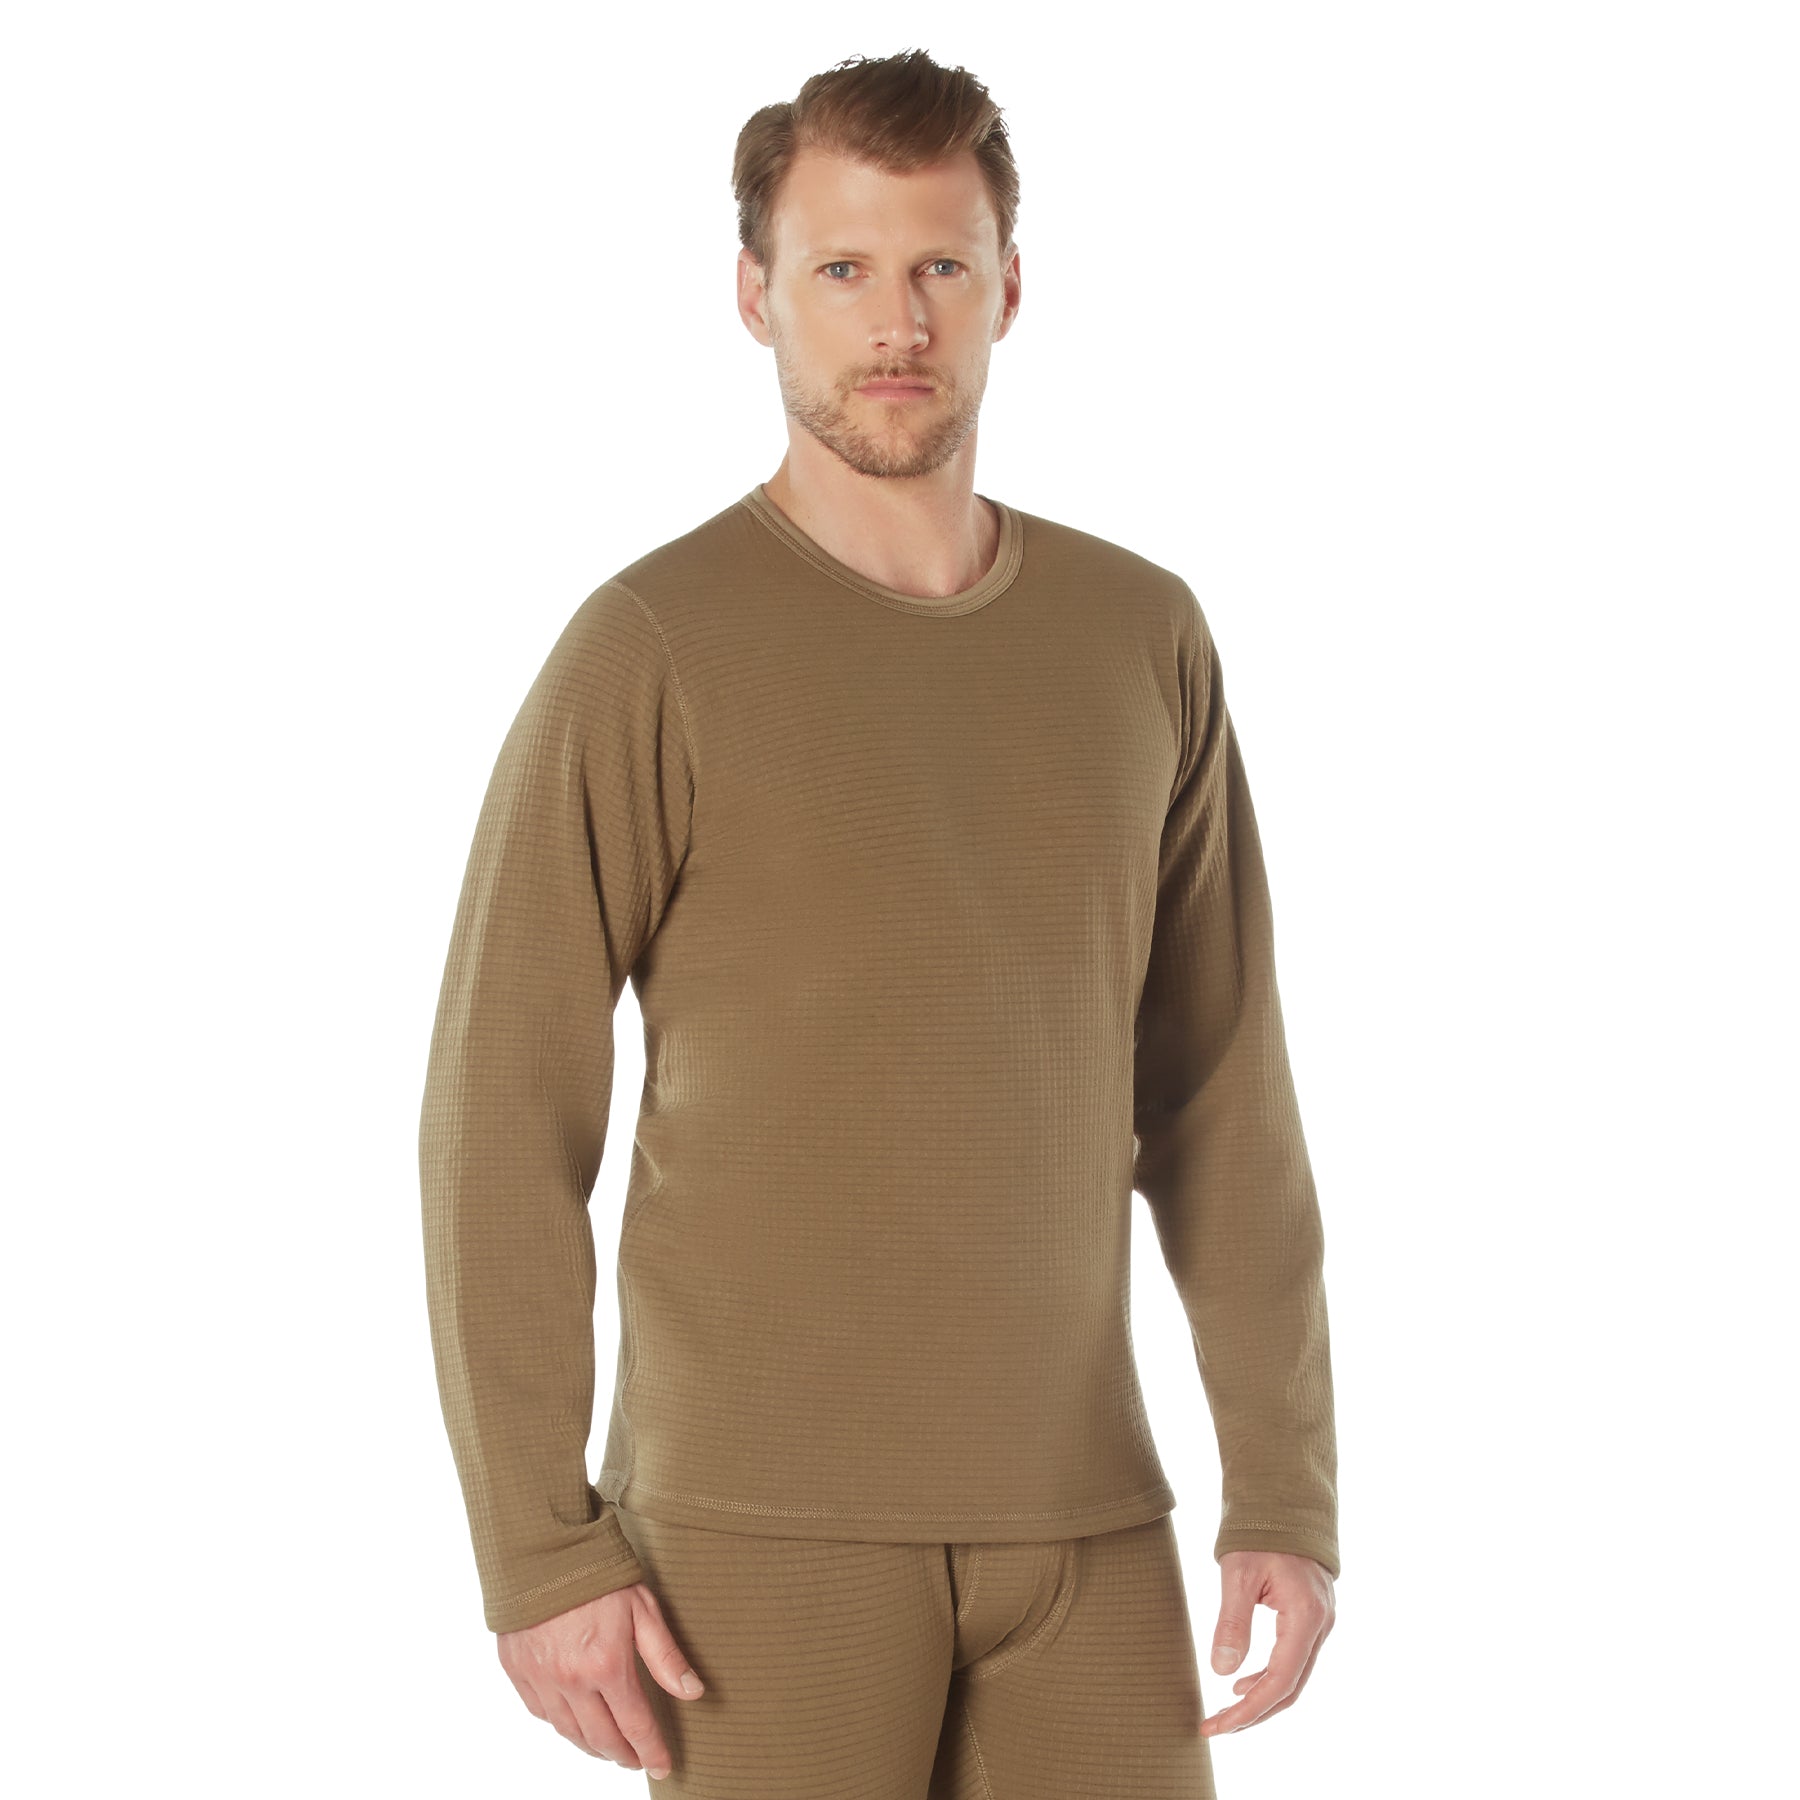 Rothco GEN III ECWCS Silk Weights Thermal Shirt Underwear Top